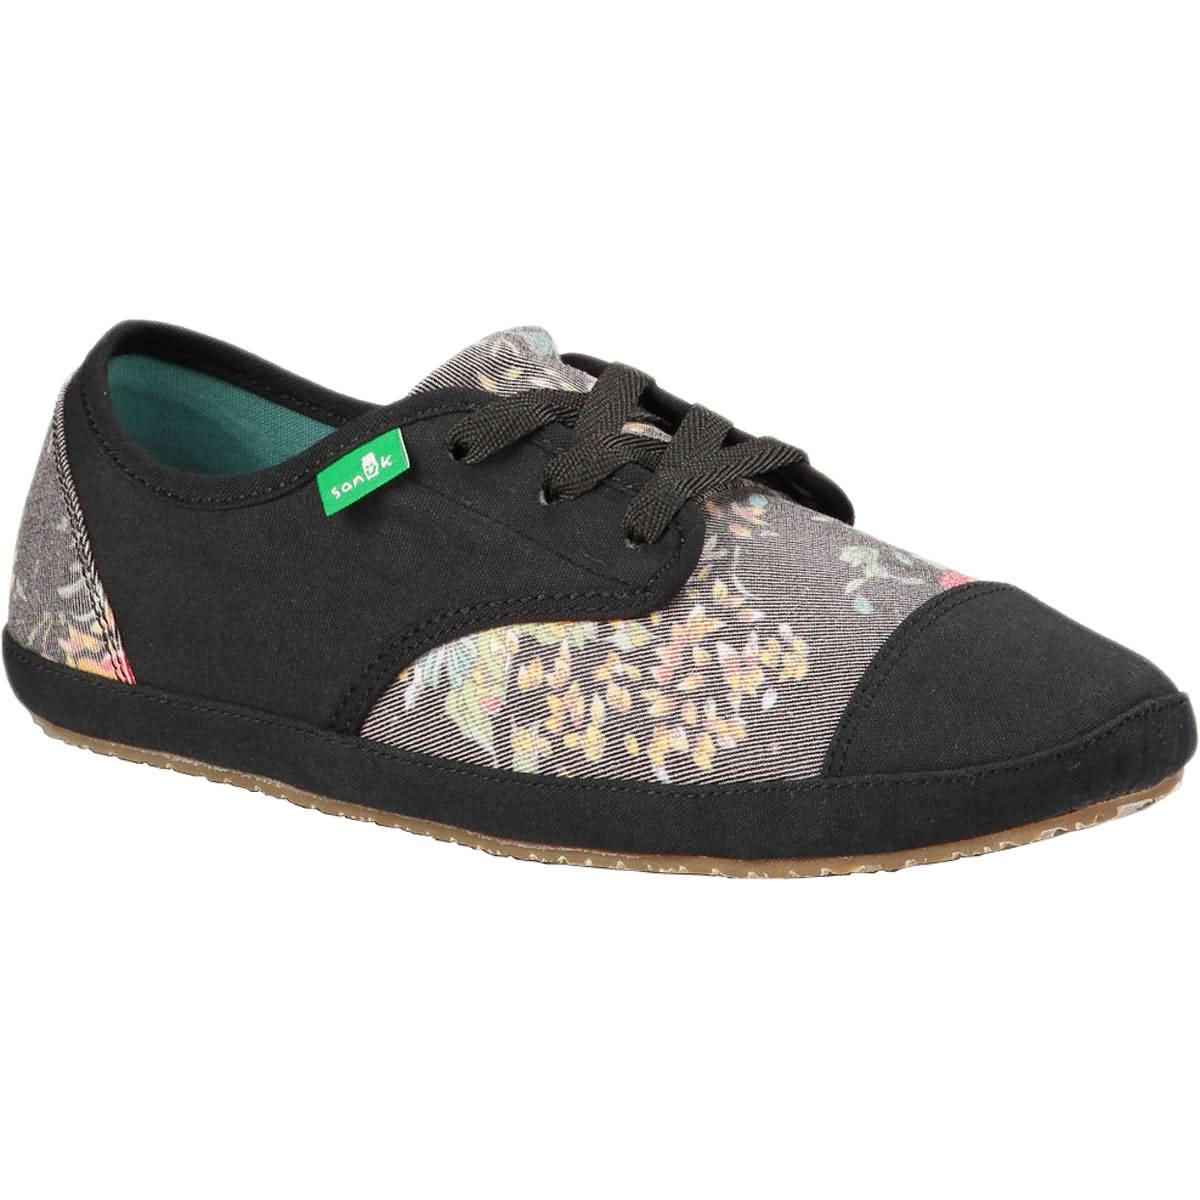 Sanuk Sock Hop Gardenia Women's Shoes Footwear (Brand New